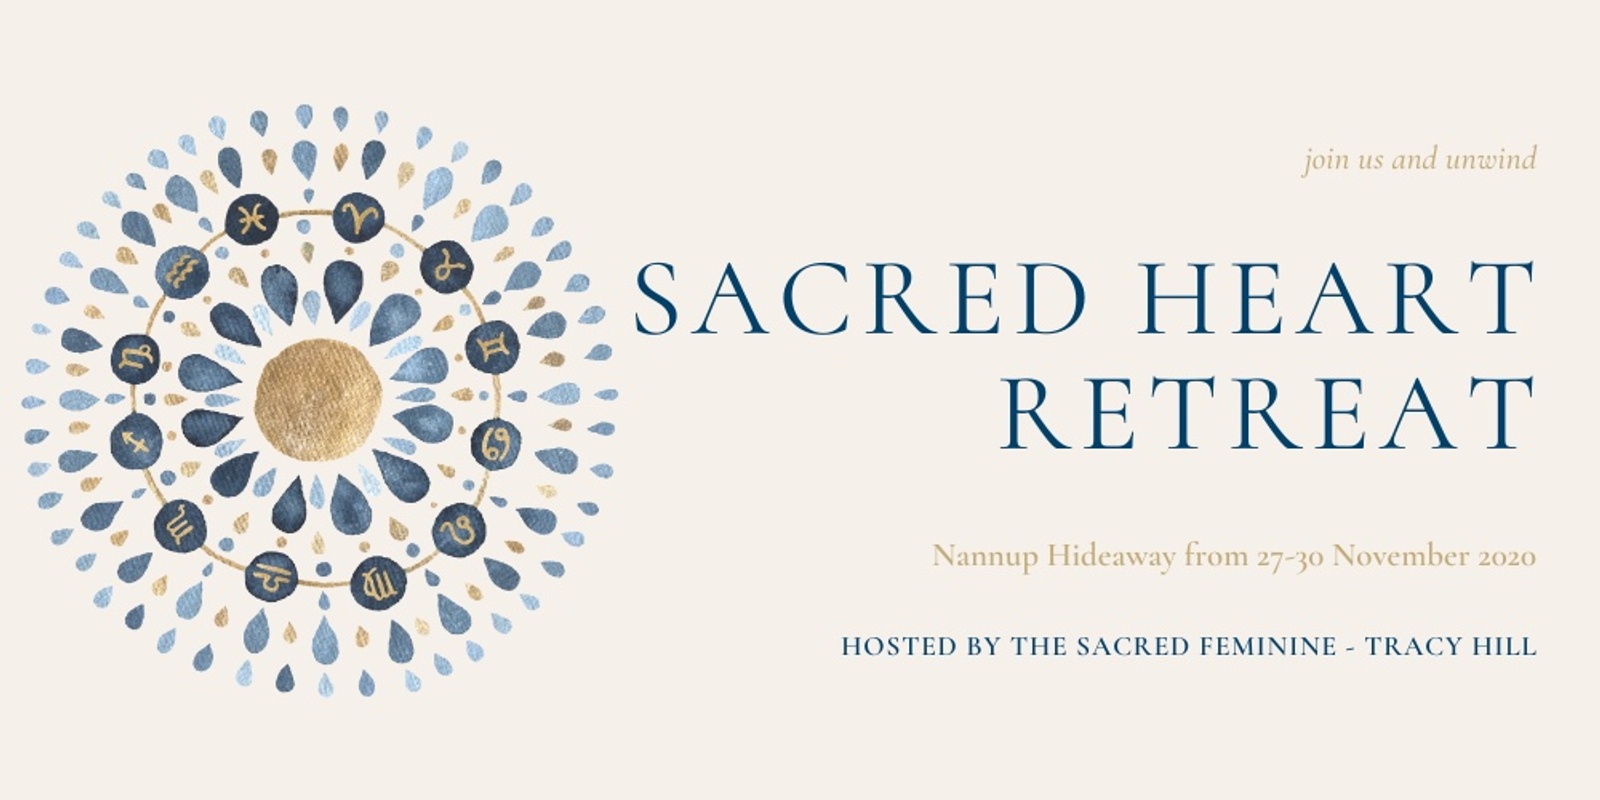 Banner image for Sacred Heart Retreat at Nannup Hideaway 27-30 Nov 2020